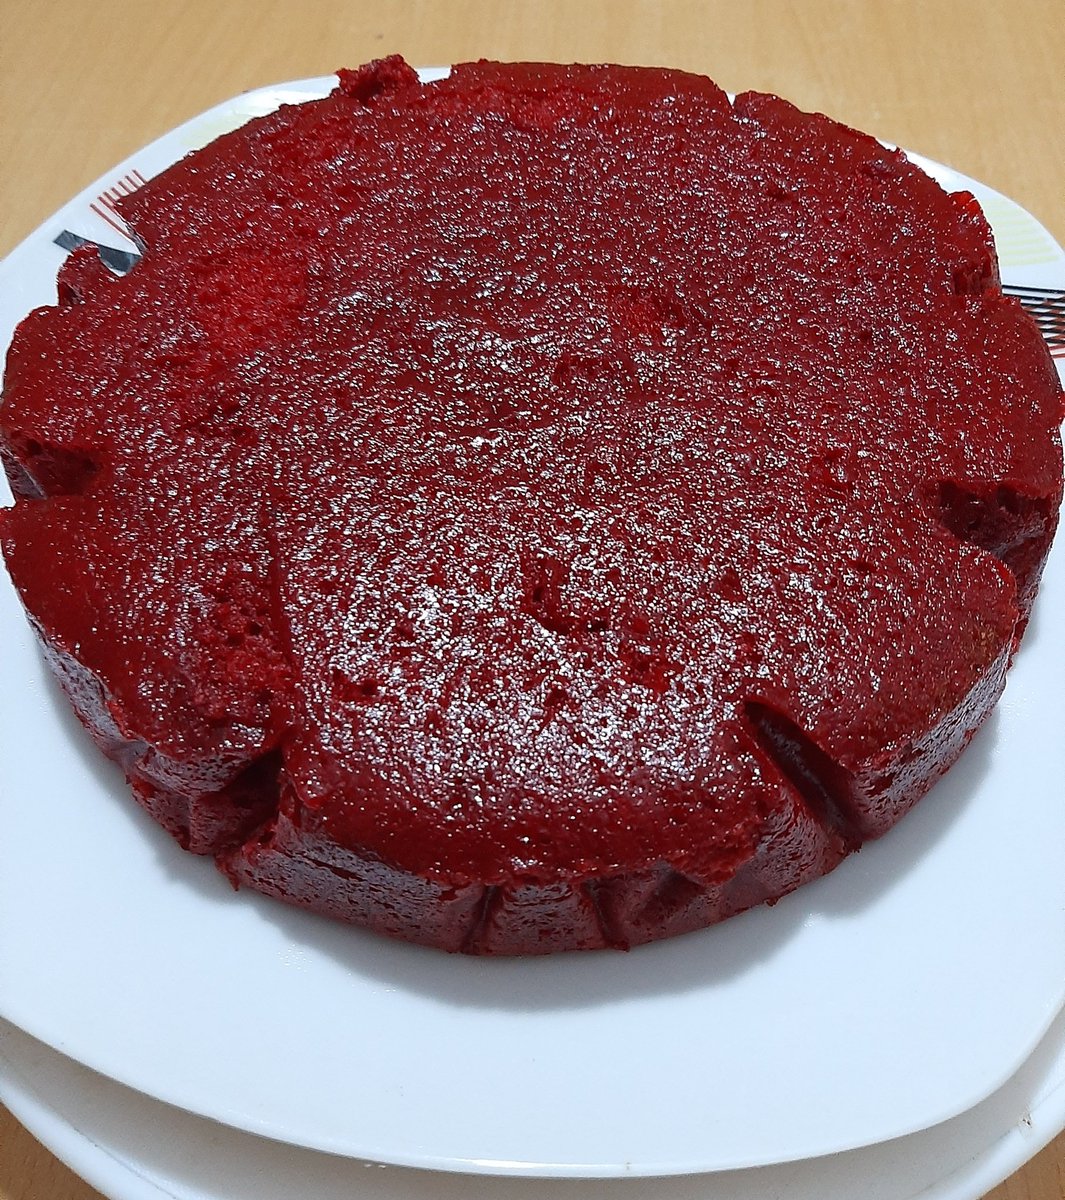 This red velvet cake is simply irresistible. Enjoy!!!😋😋😋😋

#redvelvetcake #ilovebaking #bakingtime #bakingismytherapy #bakingislife